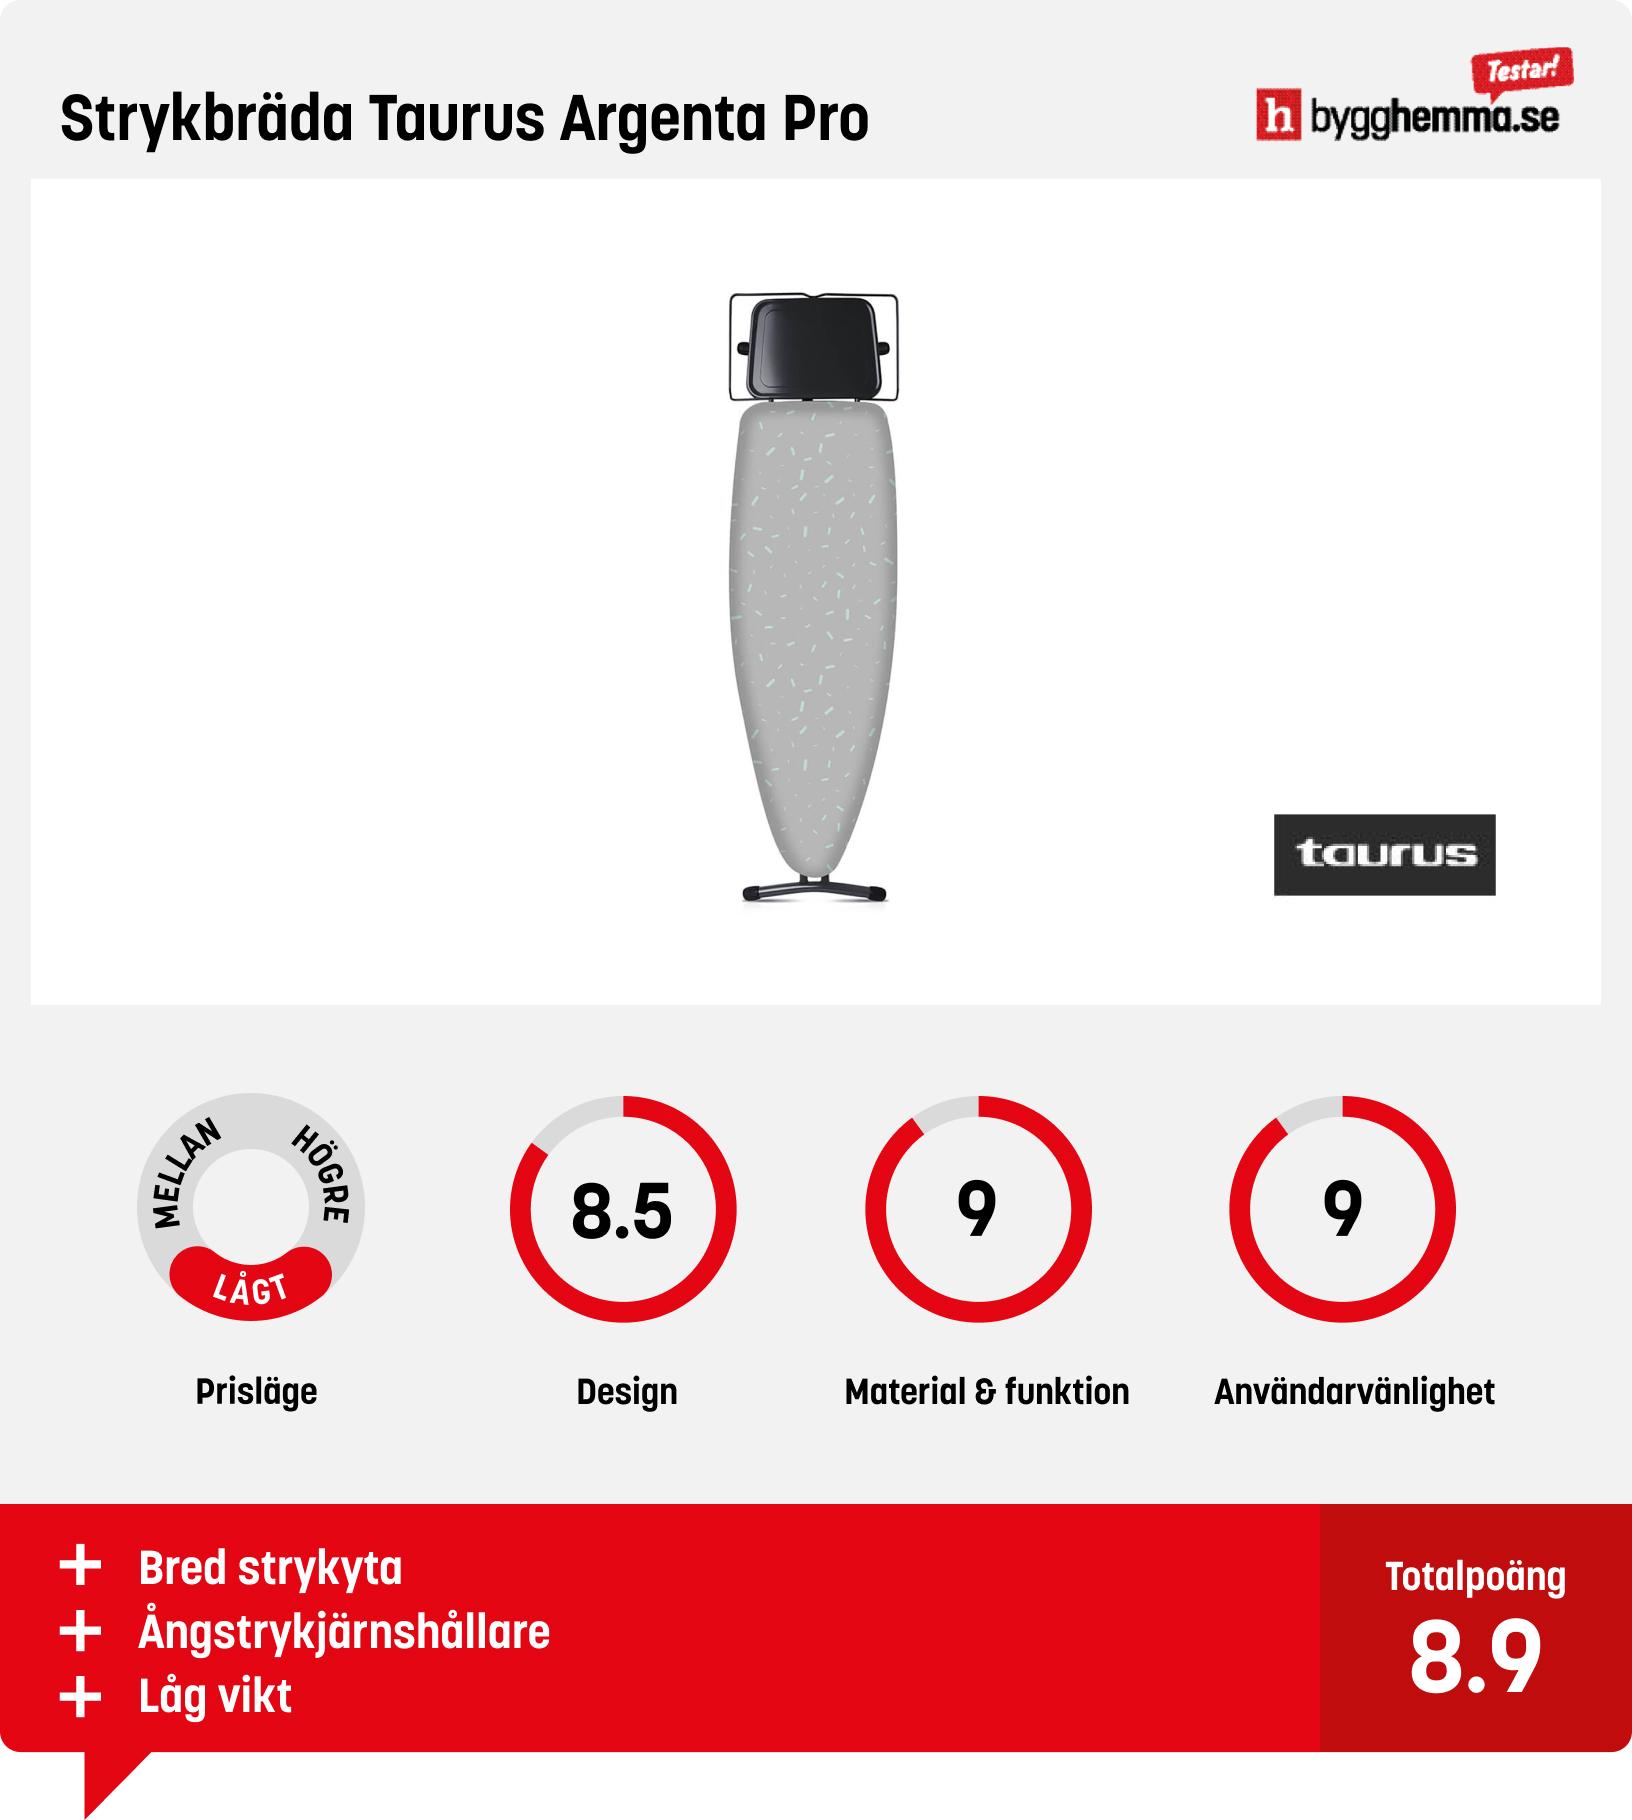 Strykbräda bäst i test - Strykbräda Taurus Argenta Pro